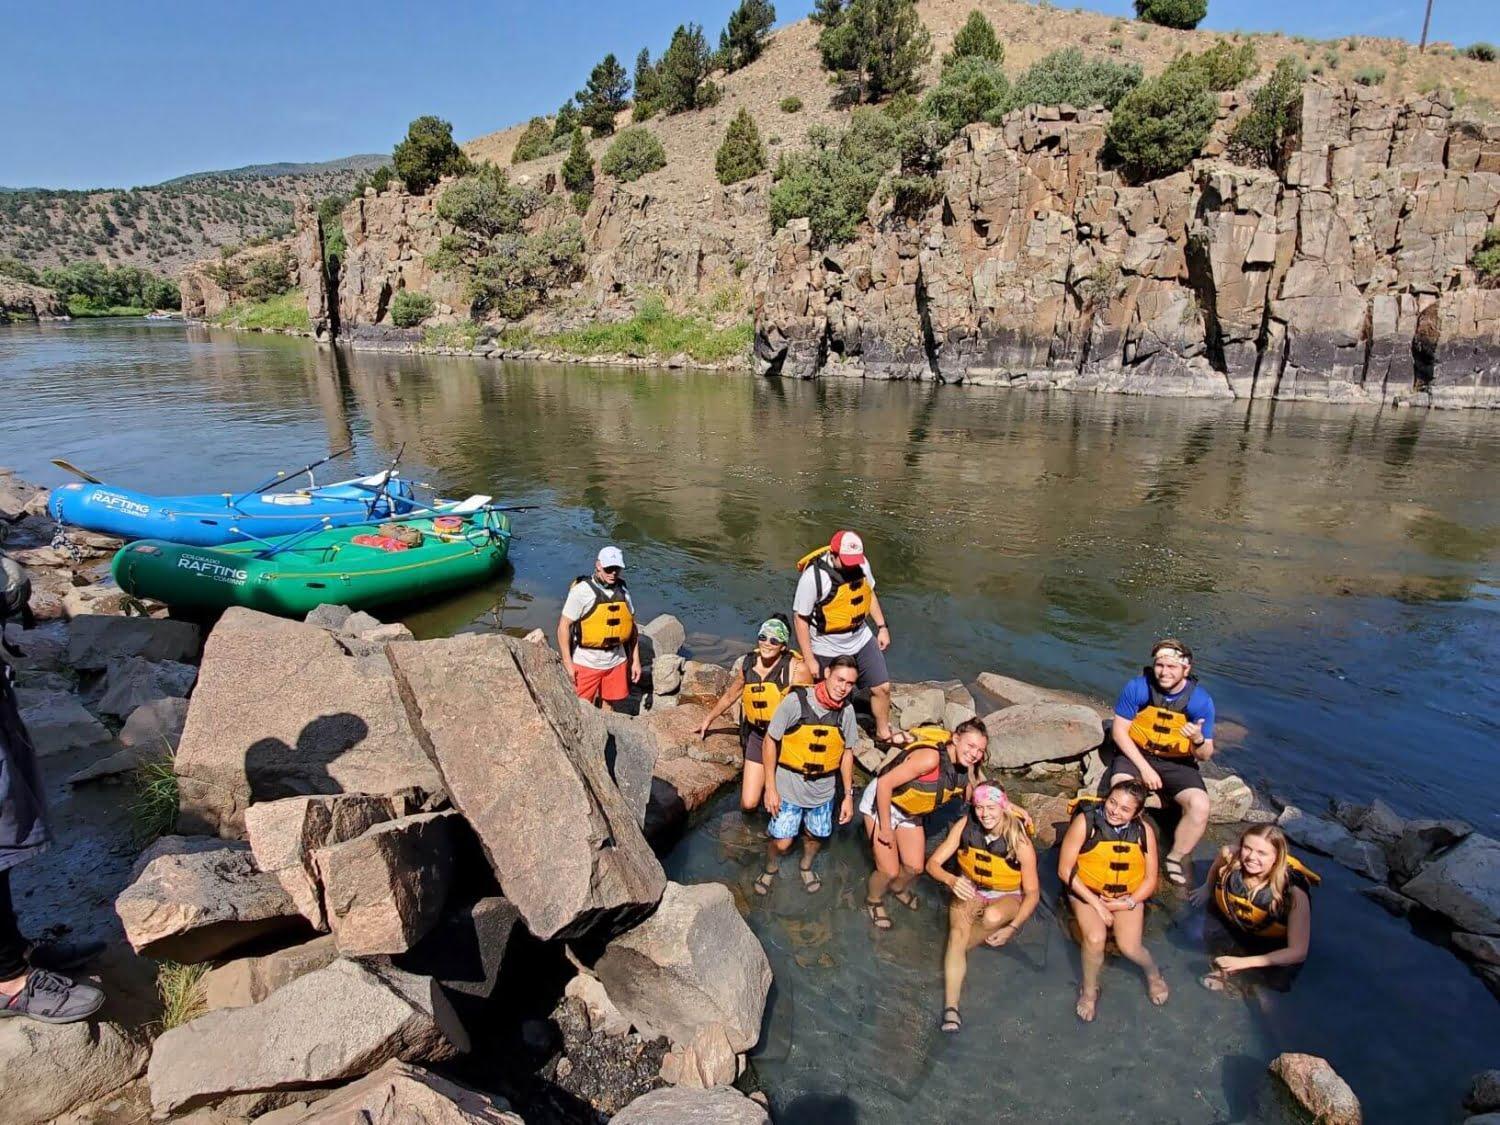 colorado river rafting camping trips